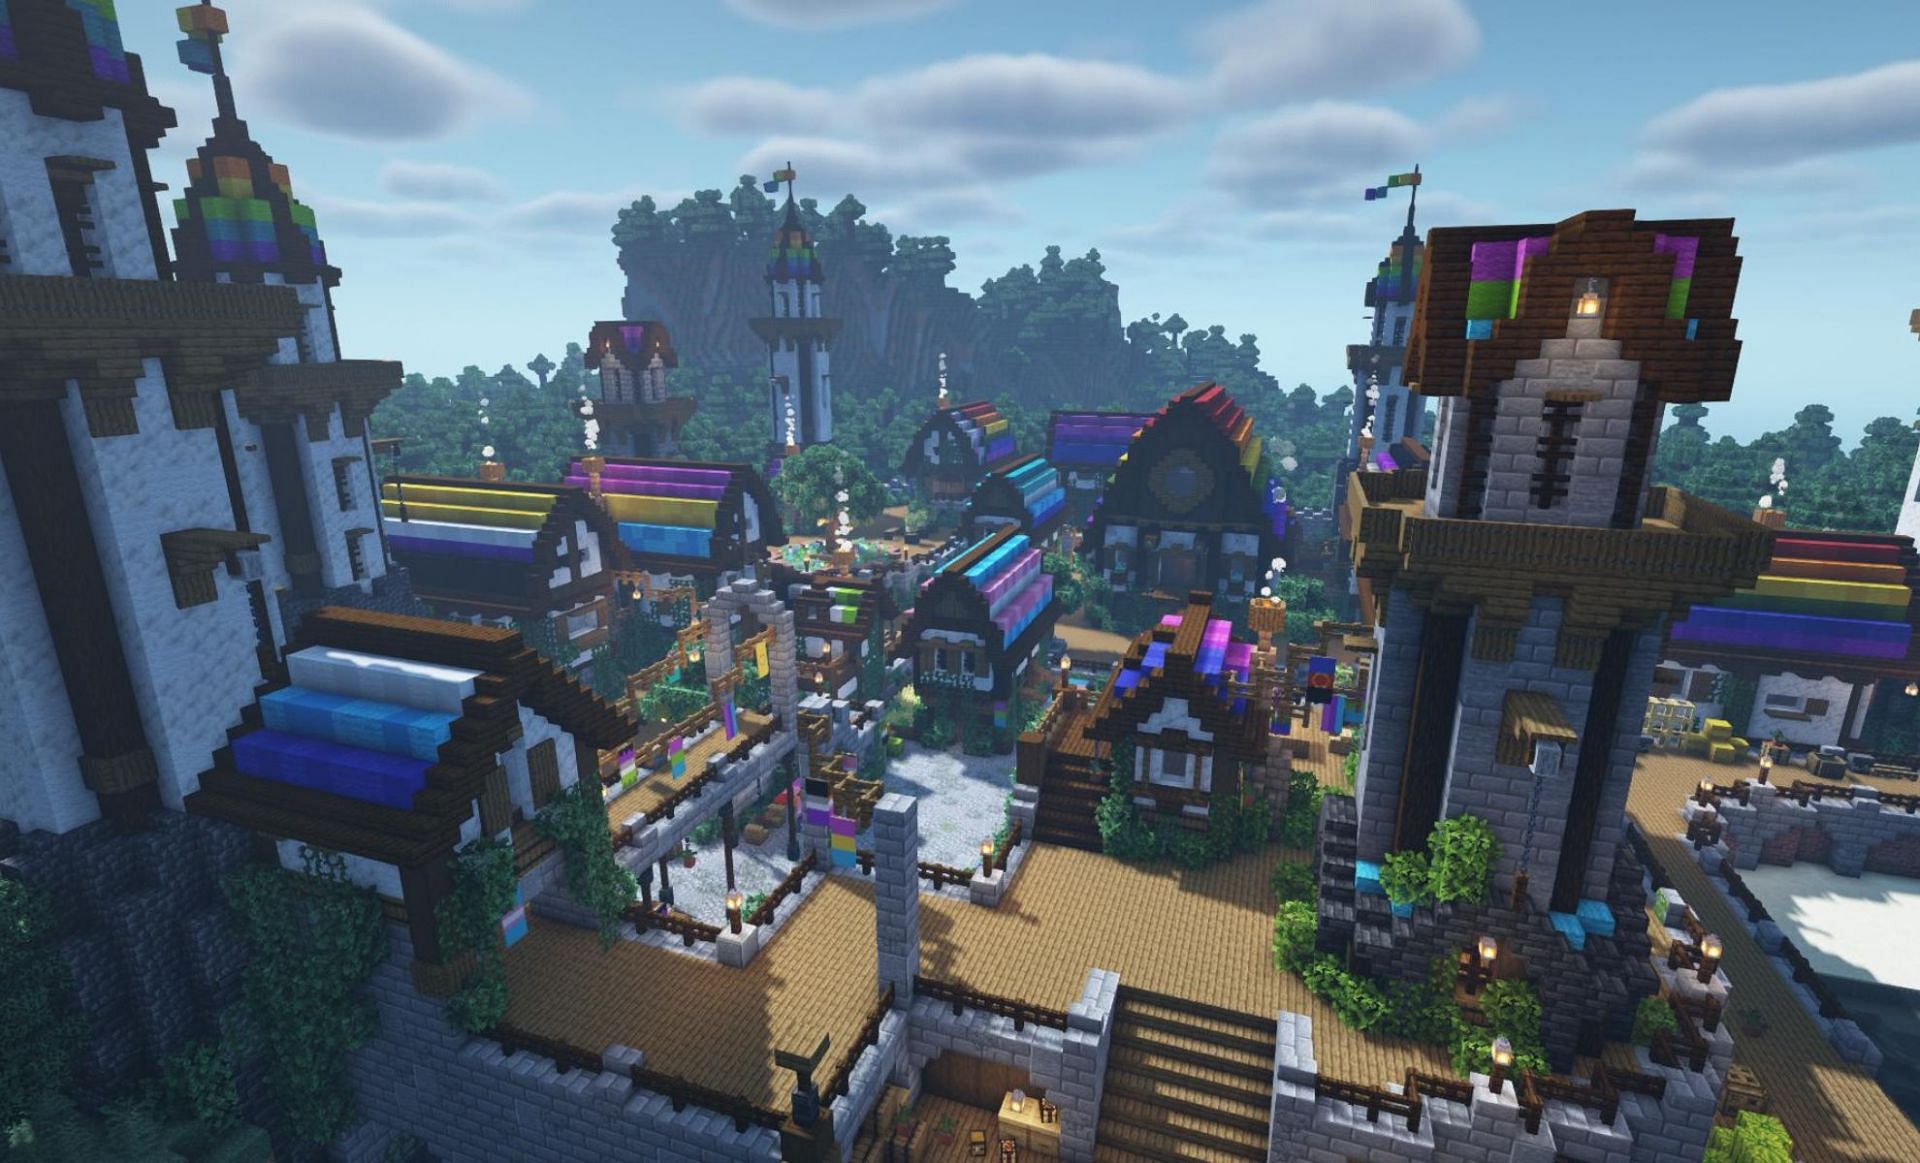 A perfectly crafted village (Image via u/Xarrior on Reddit)